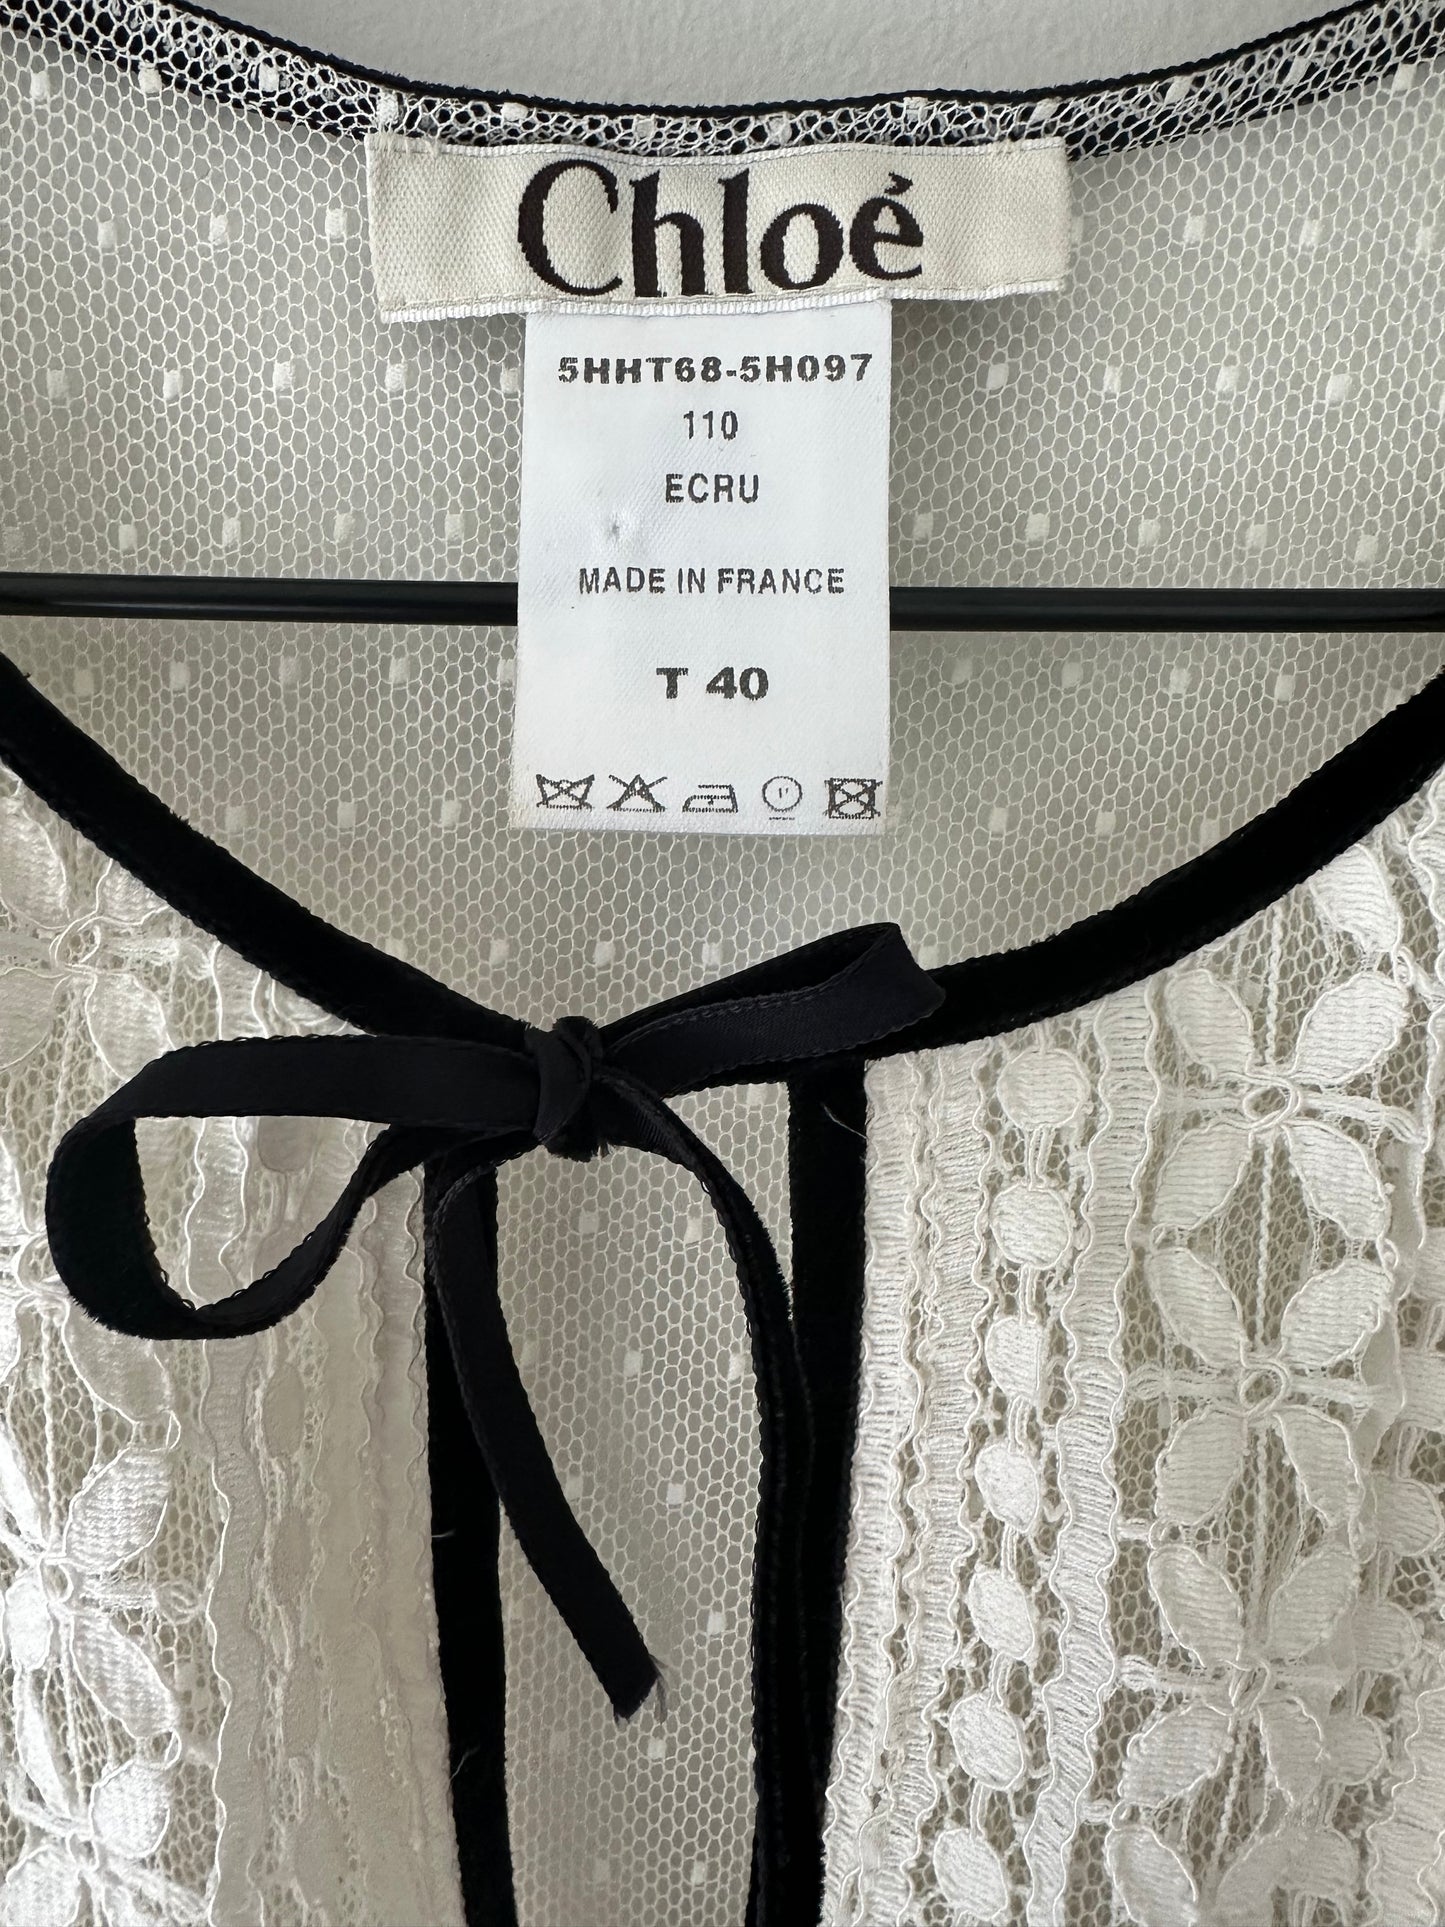 Chloe 2005 Ecru Lace Sleeveless Top with Black Ribbon Velvet Trim Size 40